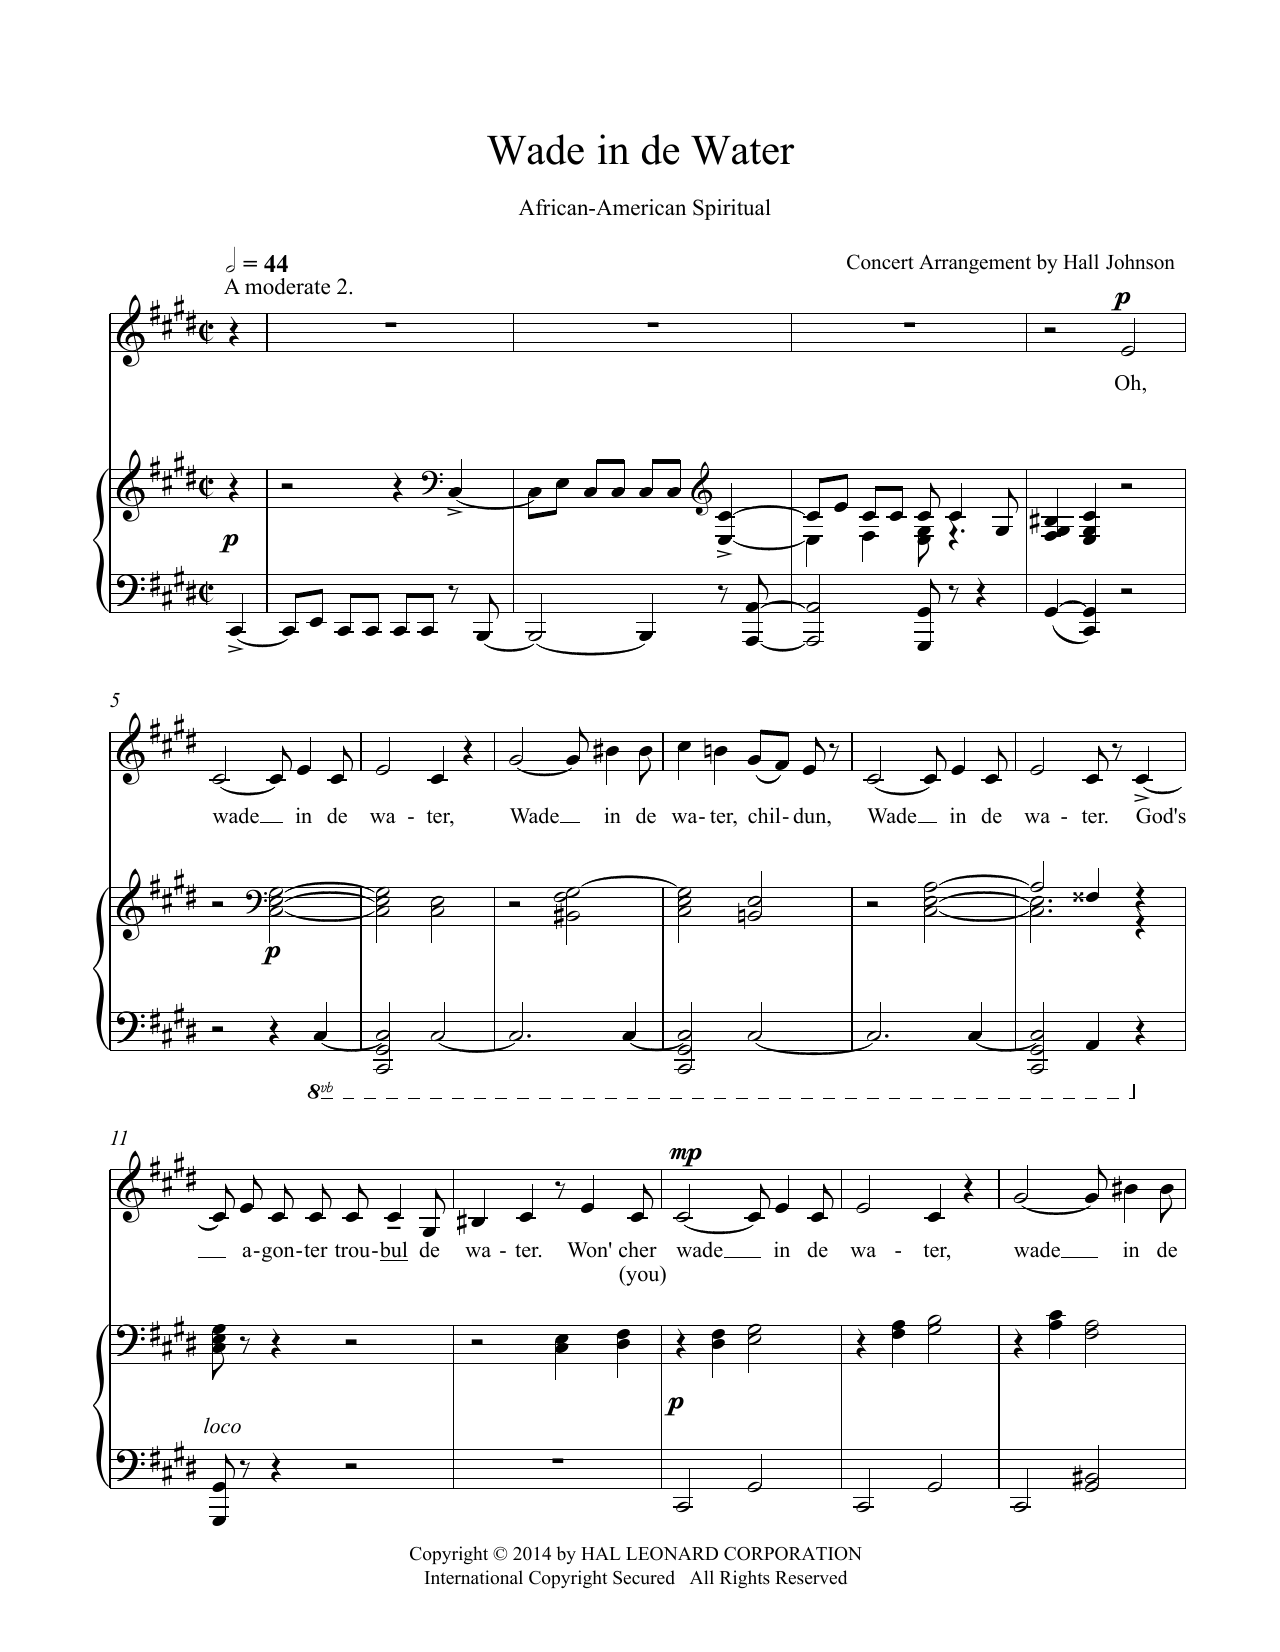 Download Hall Johnson Wade in de Water (C-sharp minor) Sheet Music